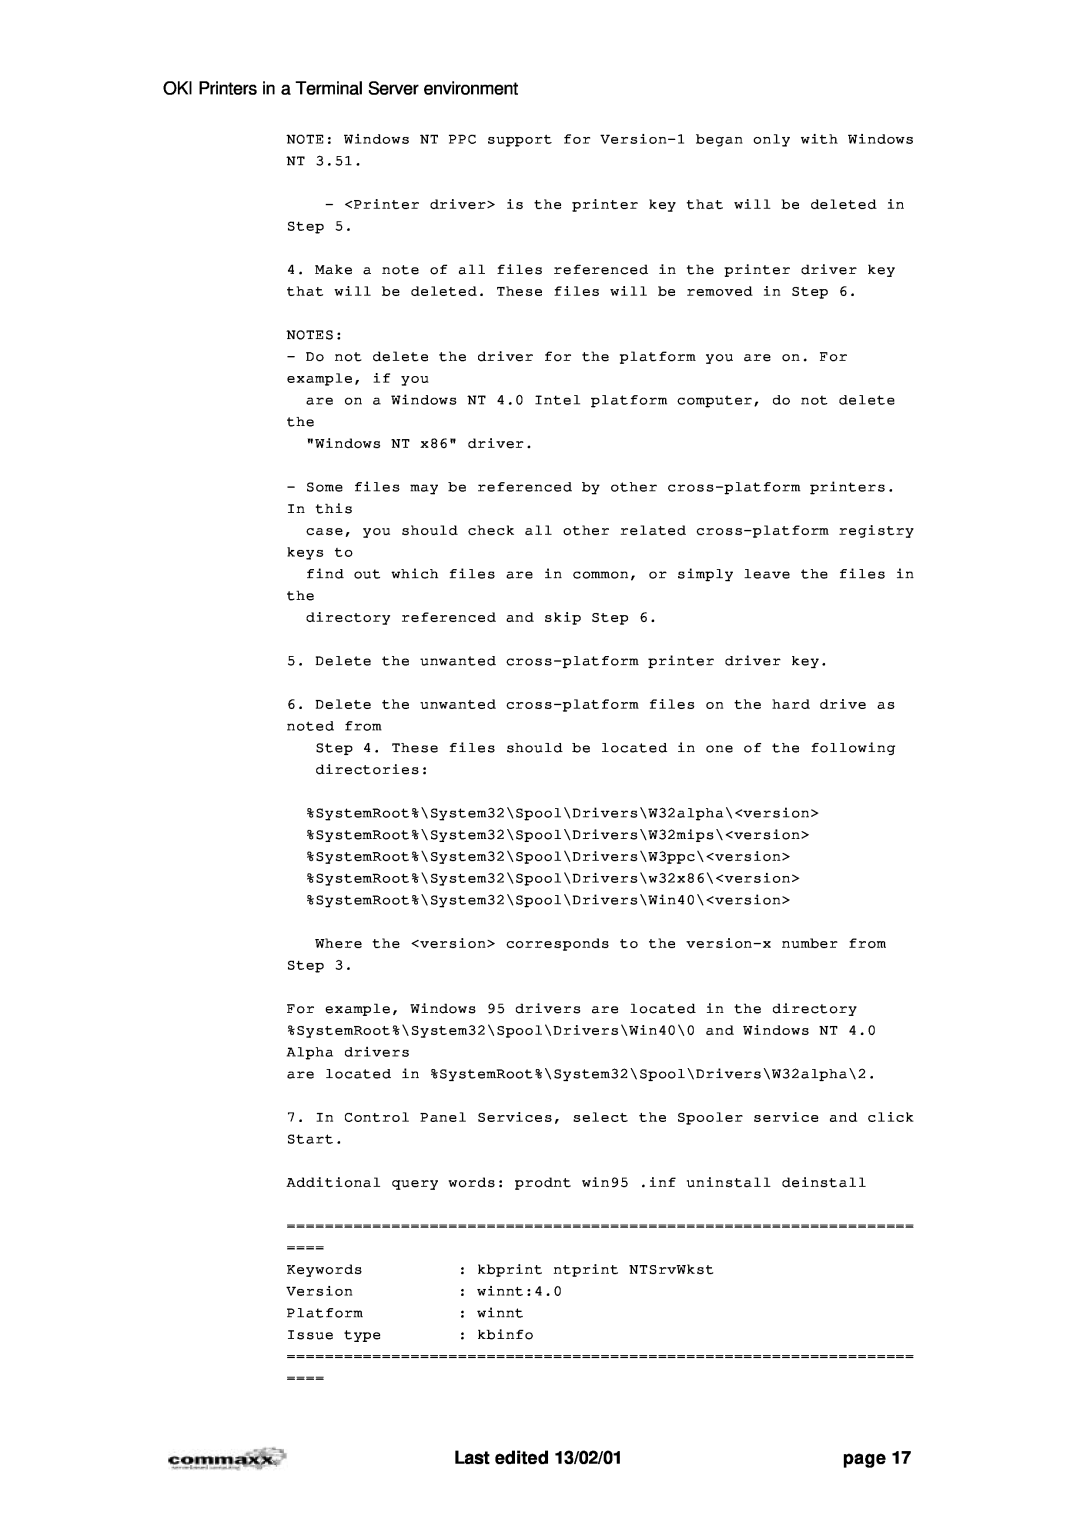 Oki 7400, 7200 manual OKI Printers in a Terminal Server environment, Last edited 13/02/01, page 